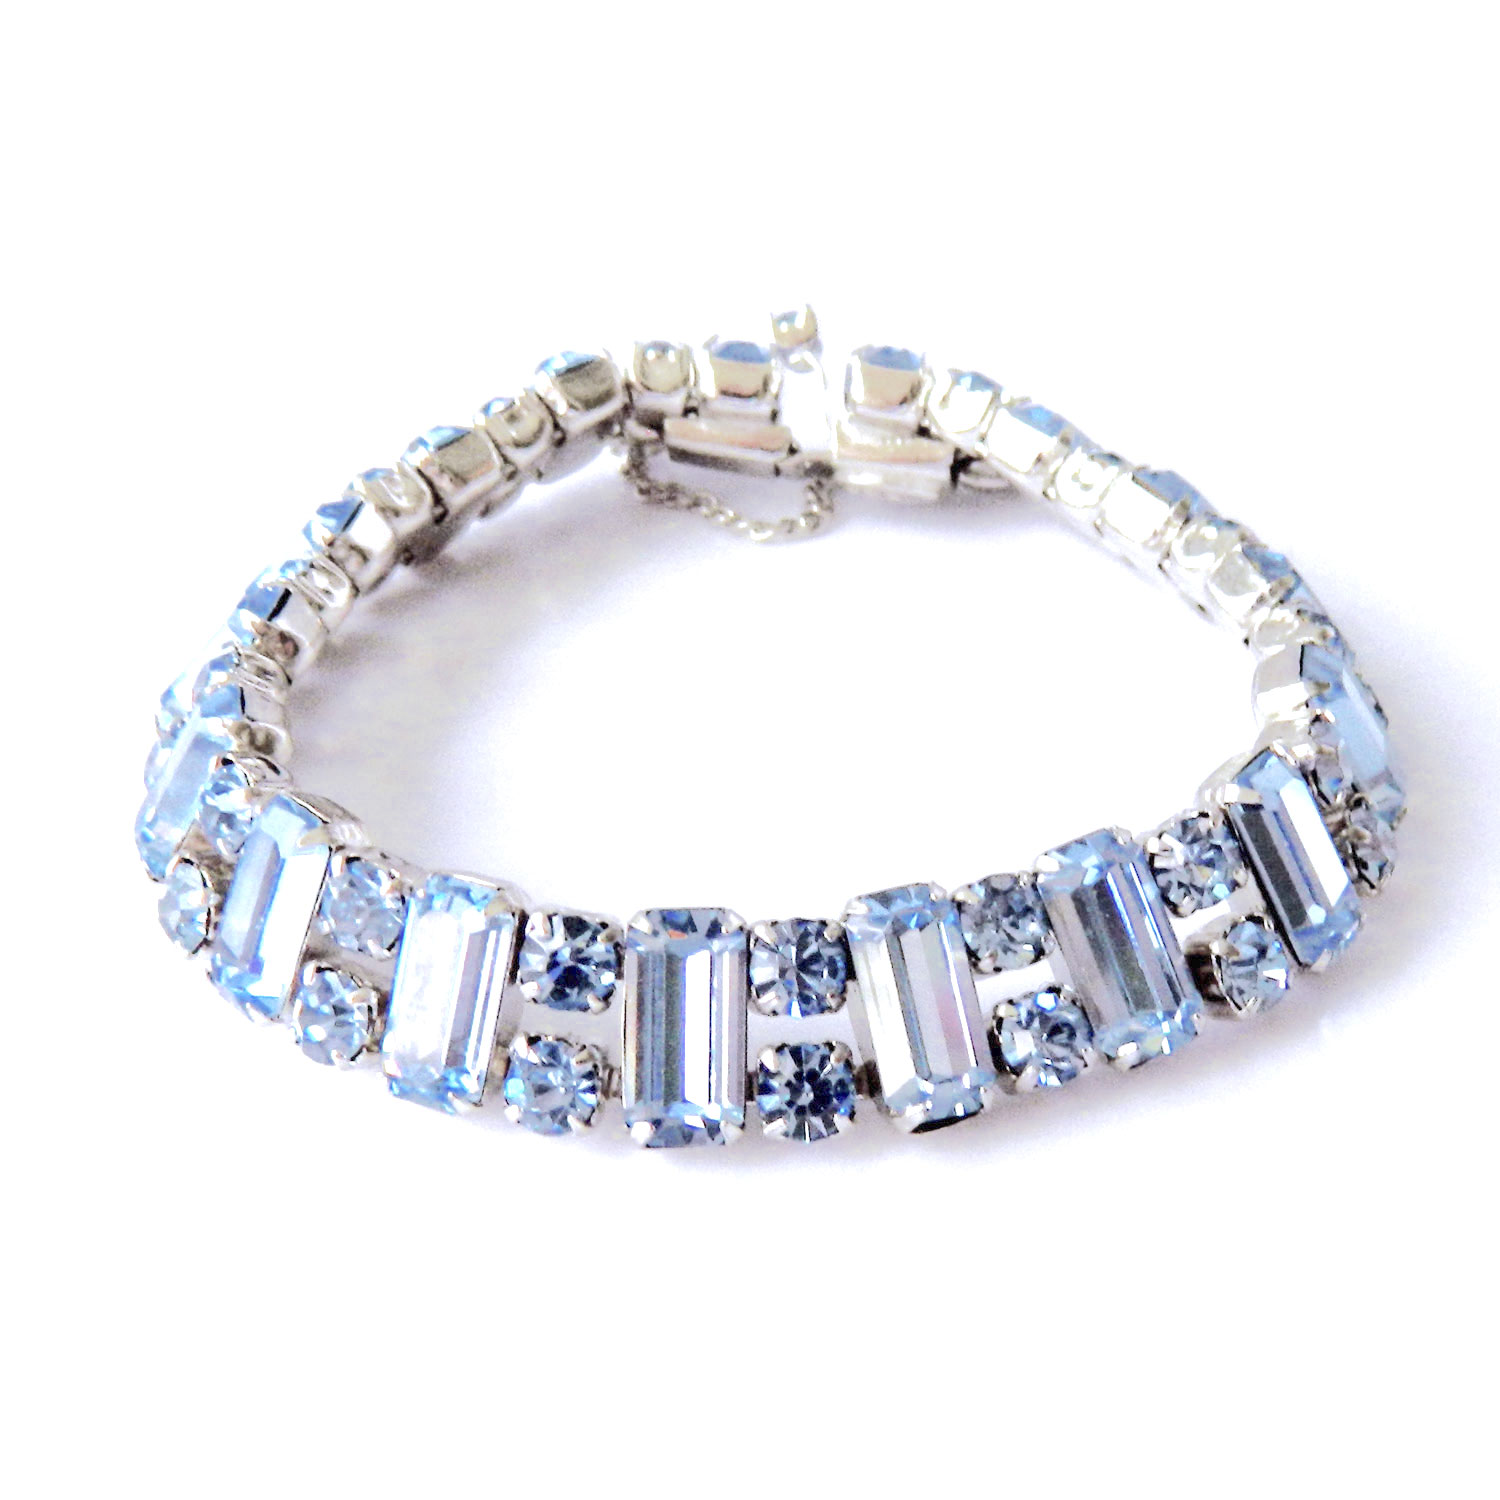 Weiss Art Deco rhinestone bracelet